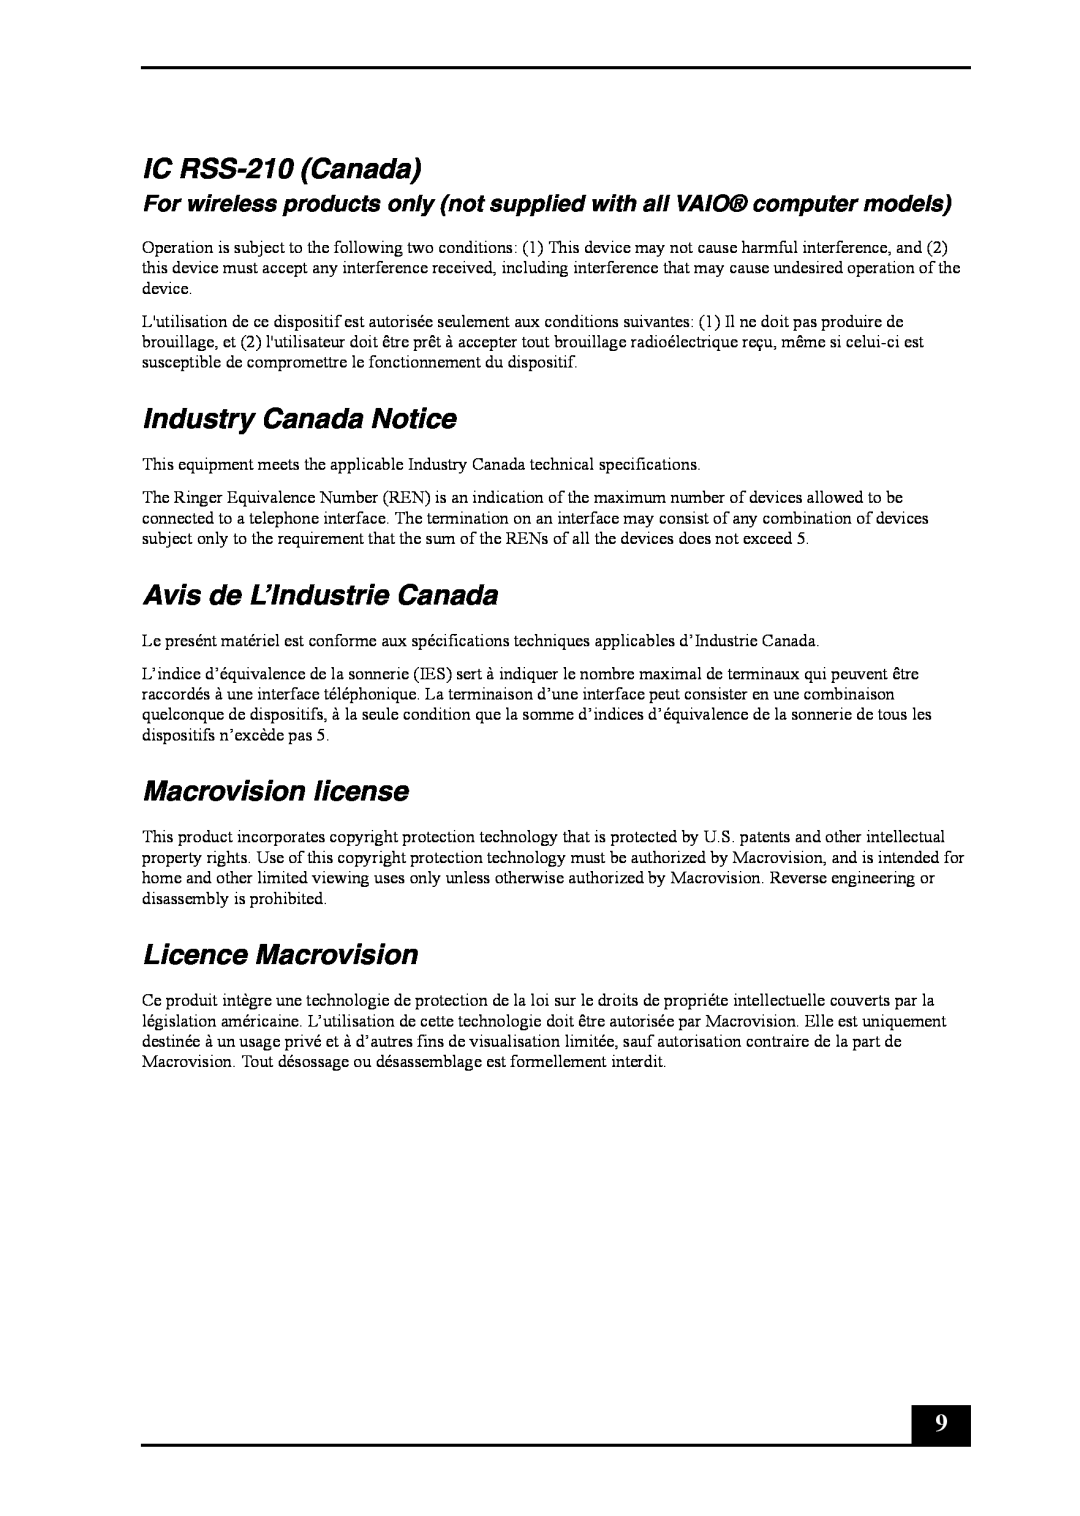 Sony VGC-RB50(G) manual IC RSS-210 Canada, Industry Canada Notice, Avis de L’Industrie Canada, Macrovision license 